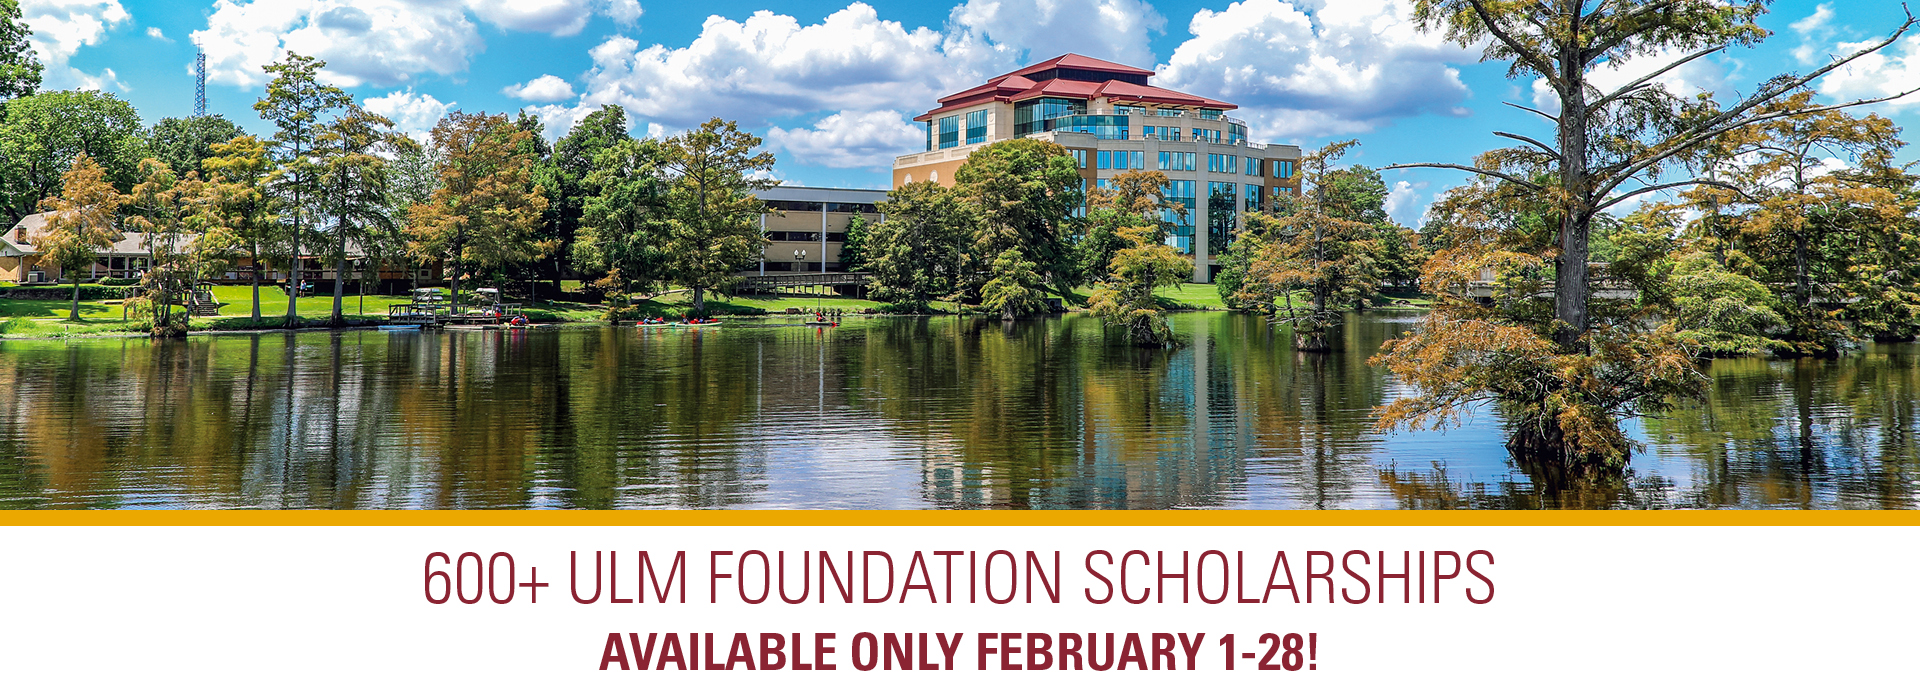 ULM Foundation Scholarships Banner